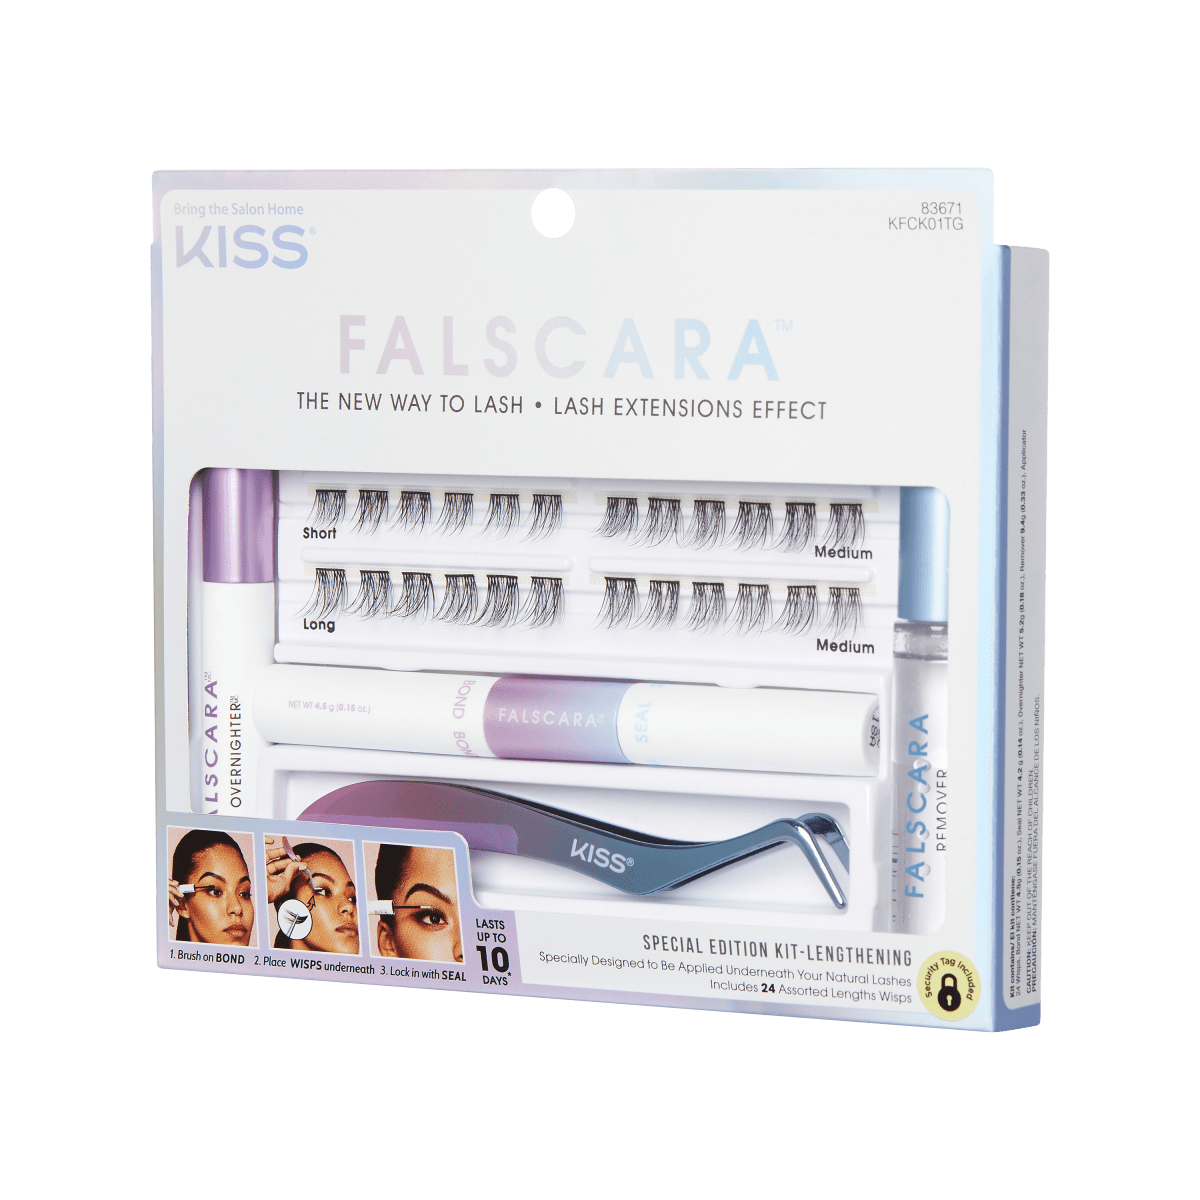 KISS Falscara Starter Kit Deluxe, Lash Clusters, Lengthening Wisps, 10mm-12mm-14mm, 24 Wisps